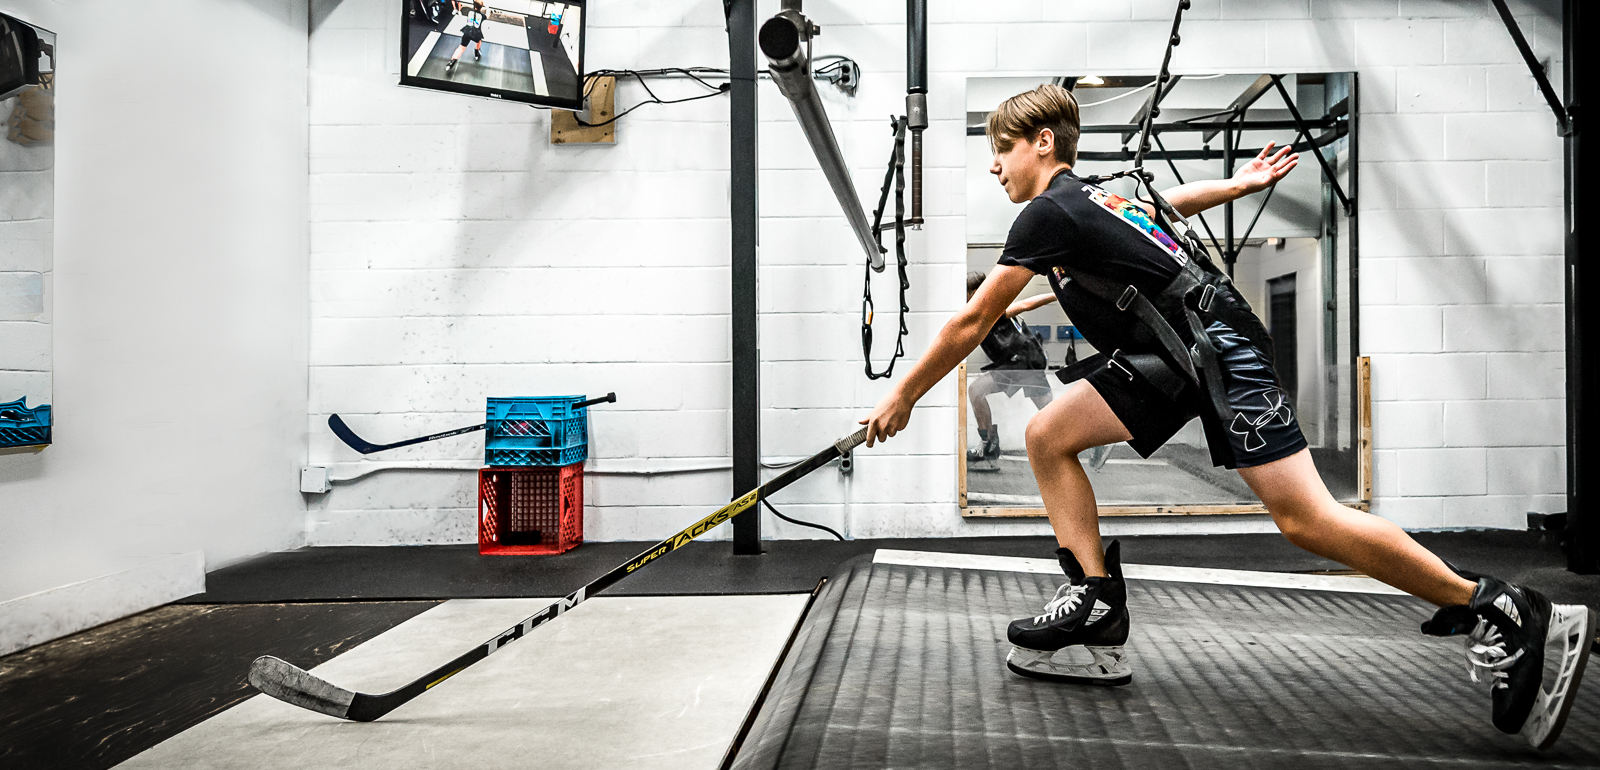 Hockey Treadmill Training for Explosive Speed and Power